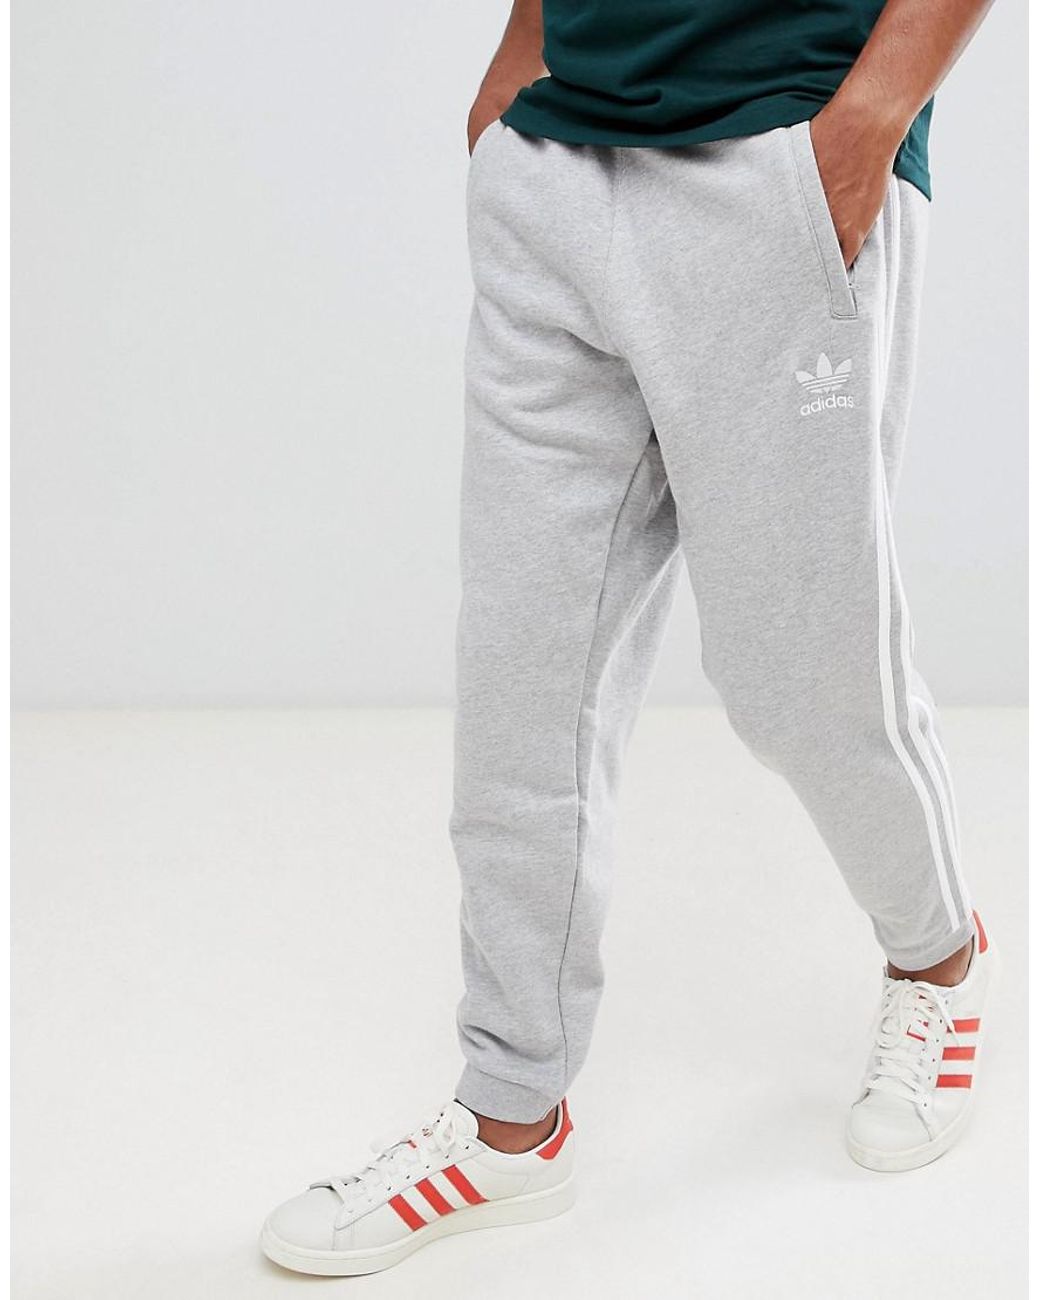 adidas originals jersey joggers in grey dn6010 Off 58% - wuuproduction.com